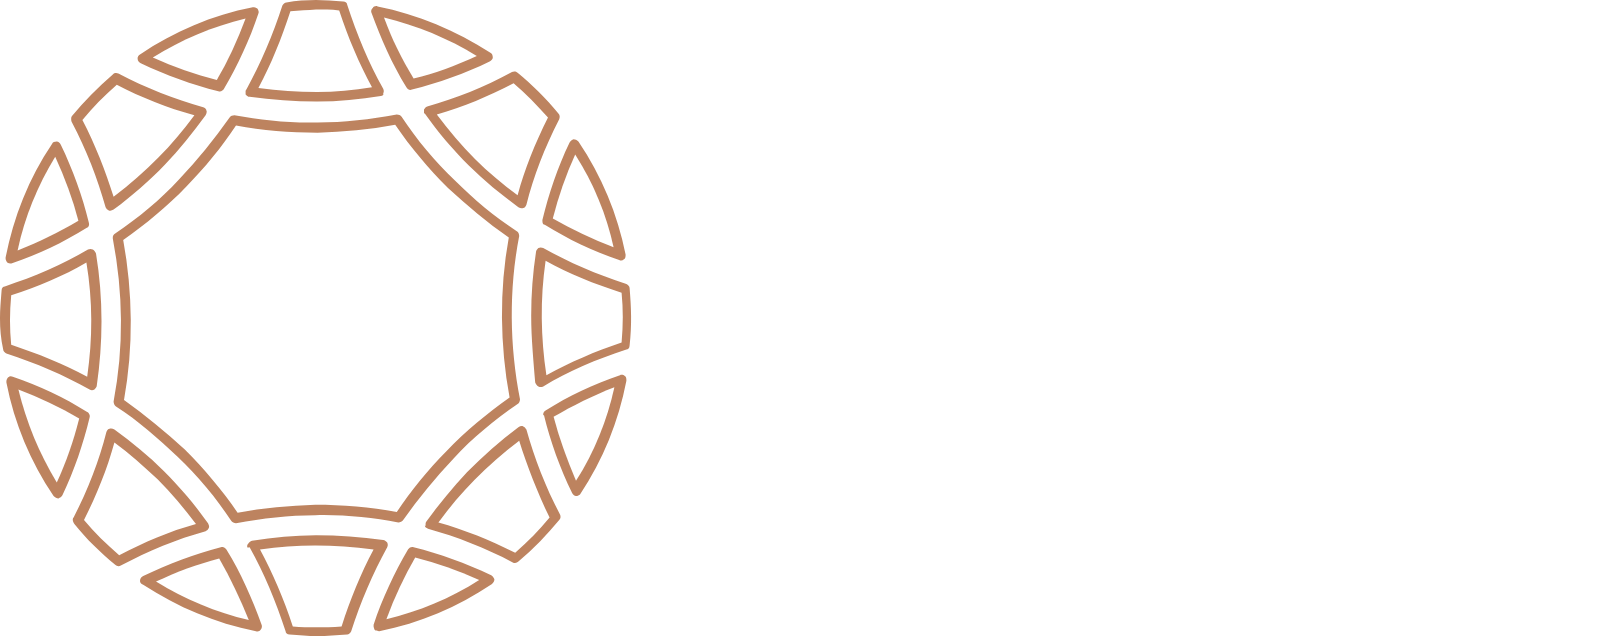 Rand Merchant Investment logo large for dark backgrounds (transparent PNG)